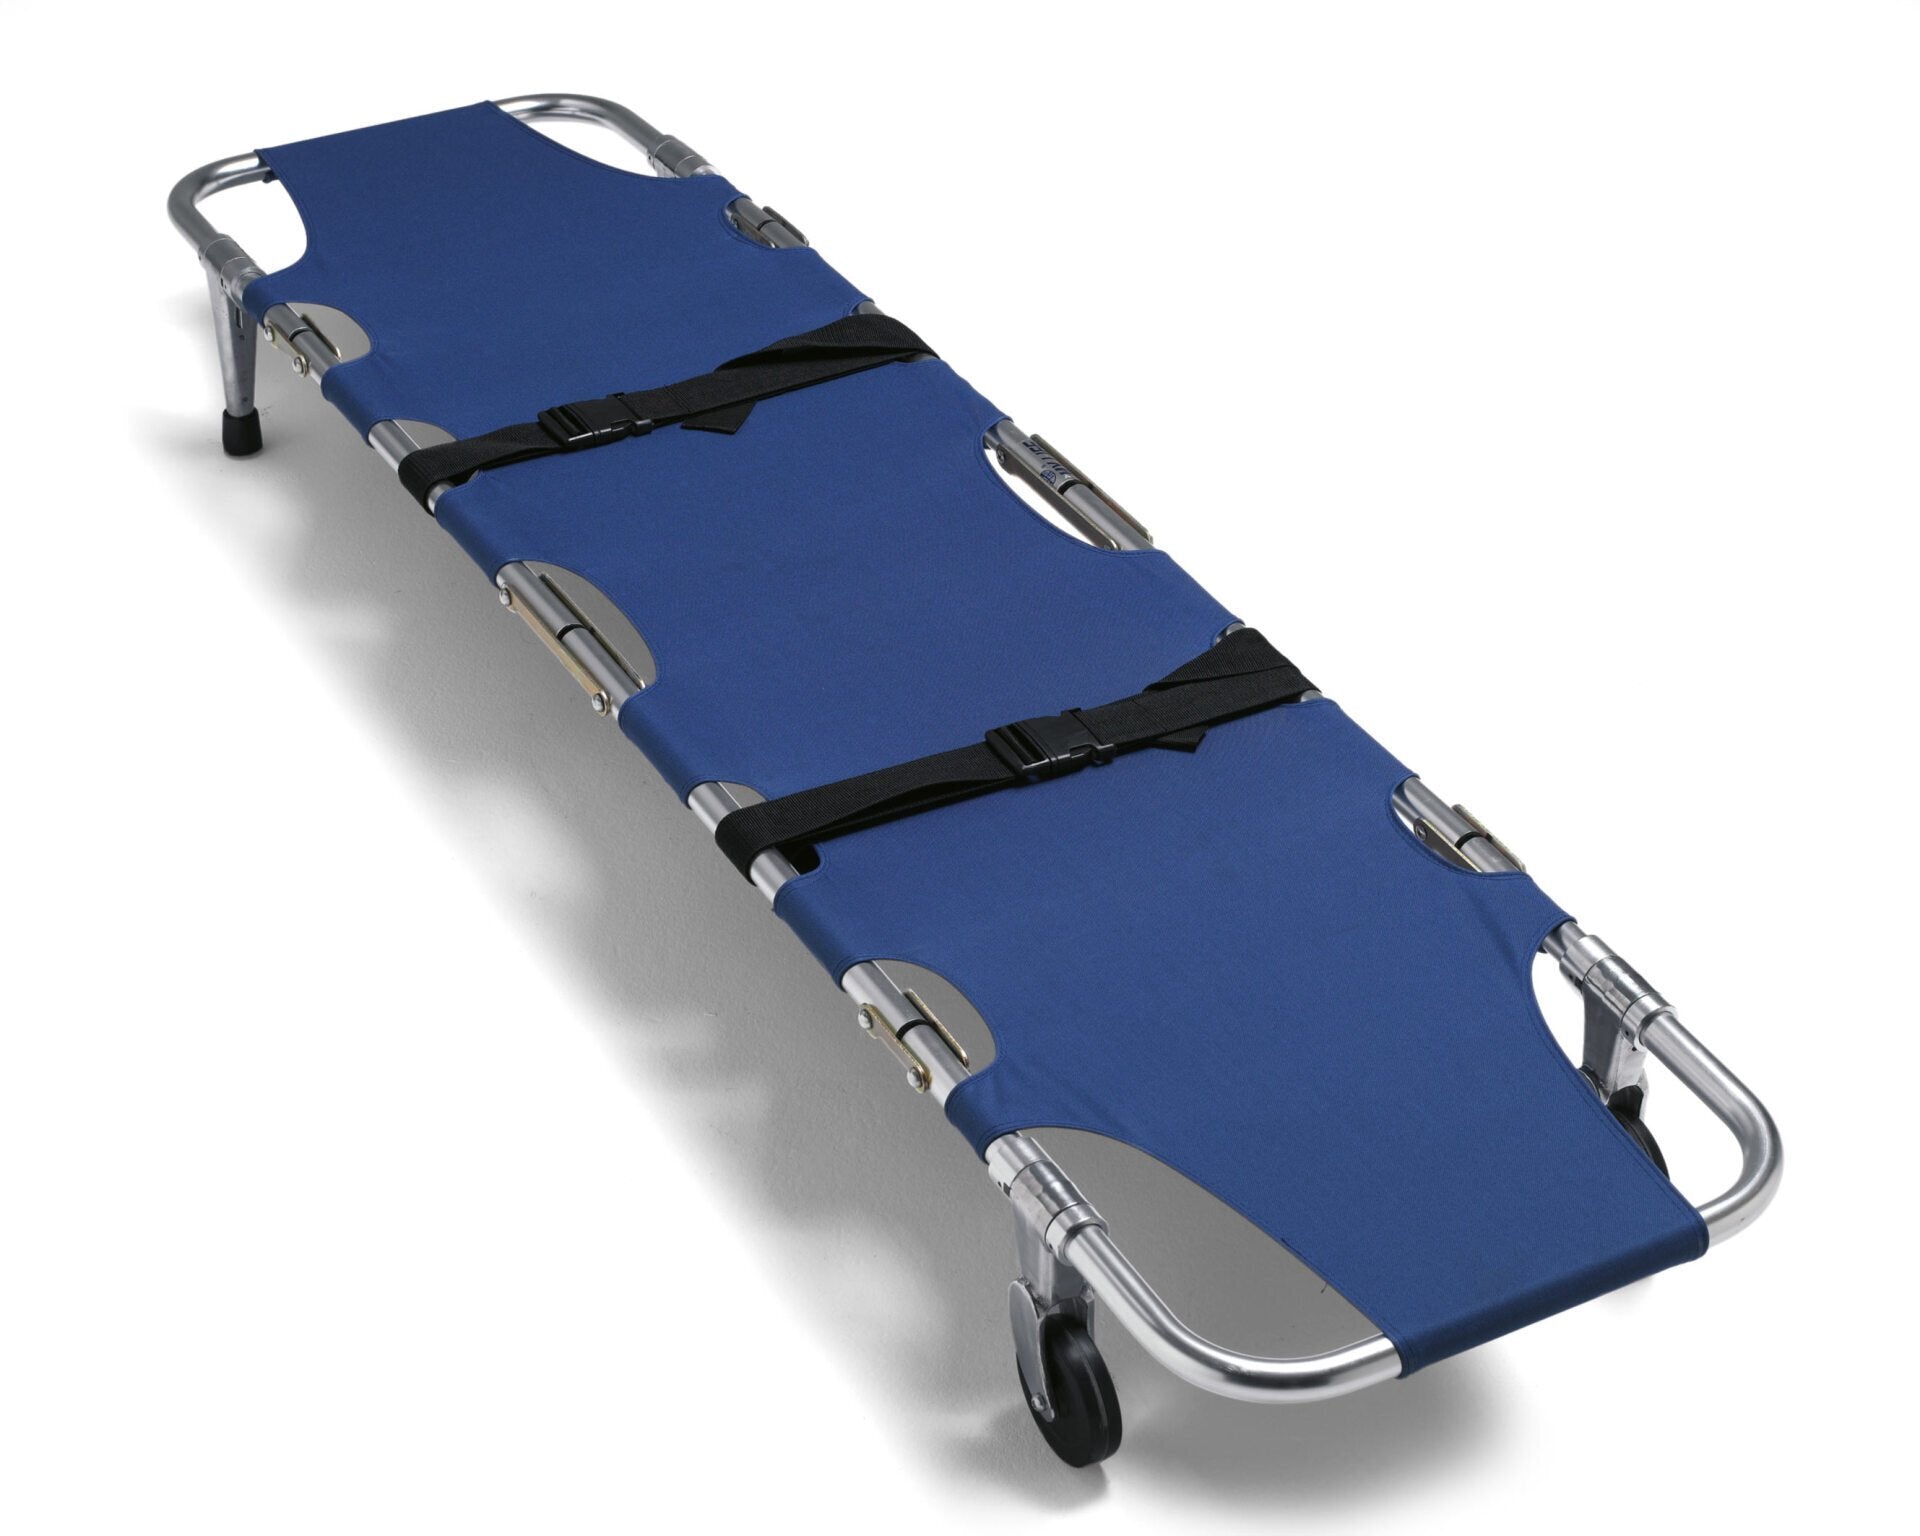 Foldable rescue stretcher